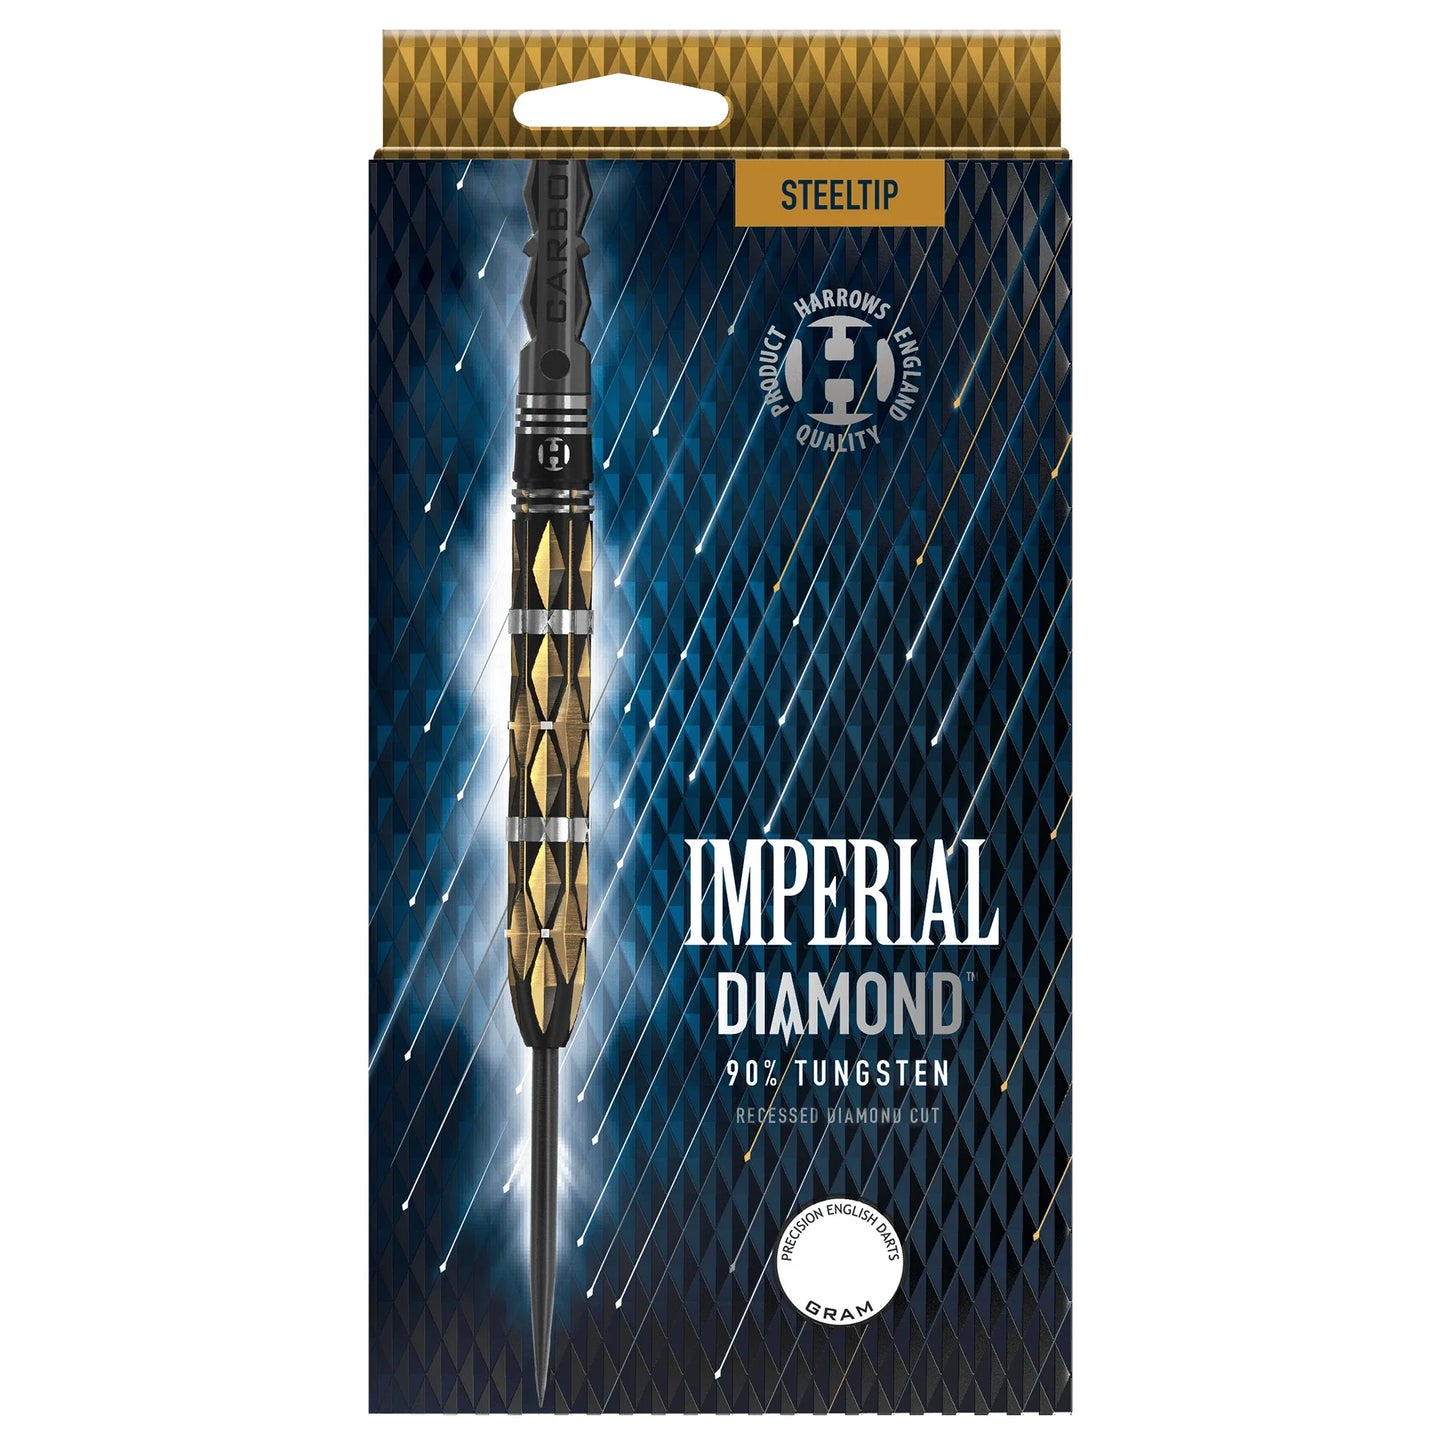 Harrows Imperial Diamond 21g Darts